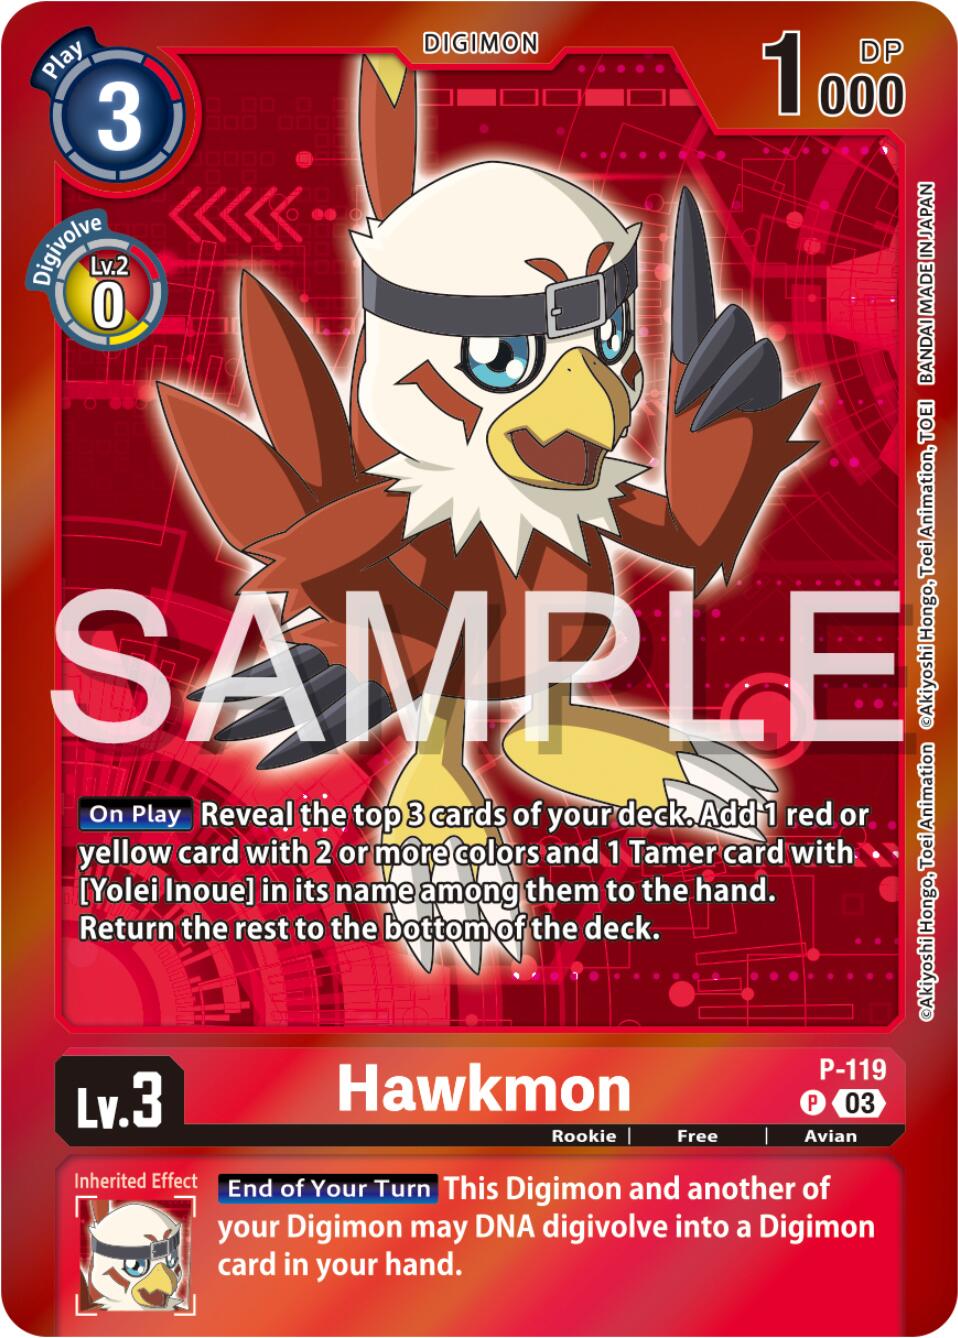 Hawkmon [P-119] - P-119 (Digimon Adventure Box 2024) [Promotional Cards] | The Time Vault CA